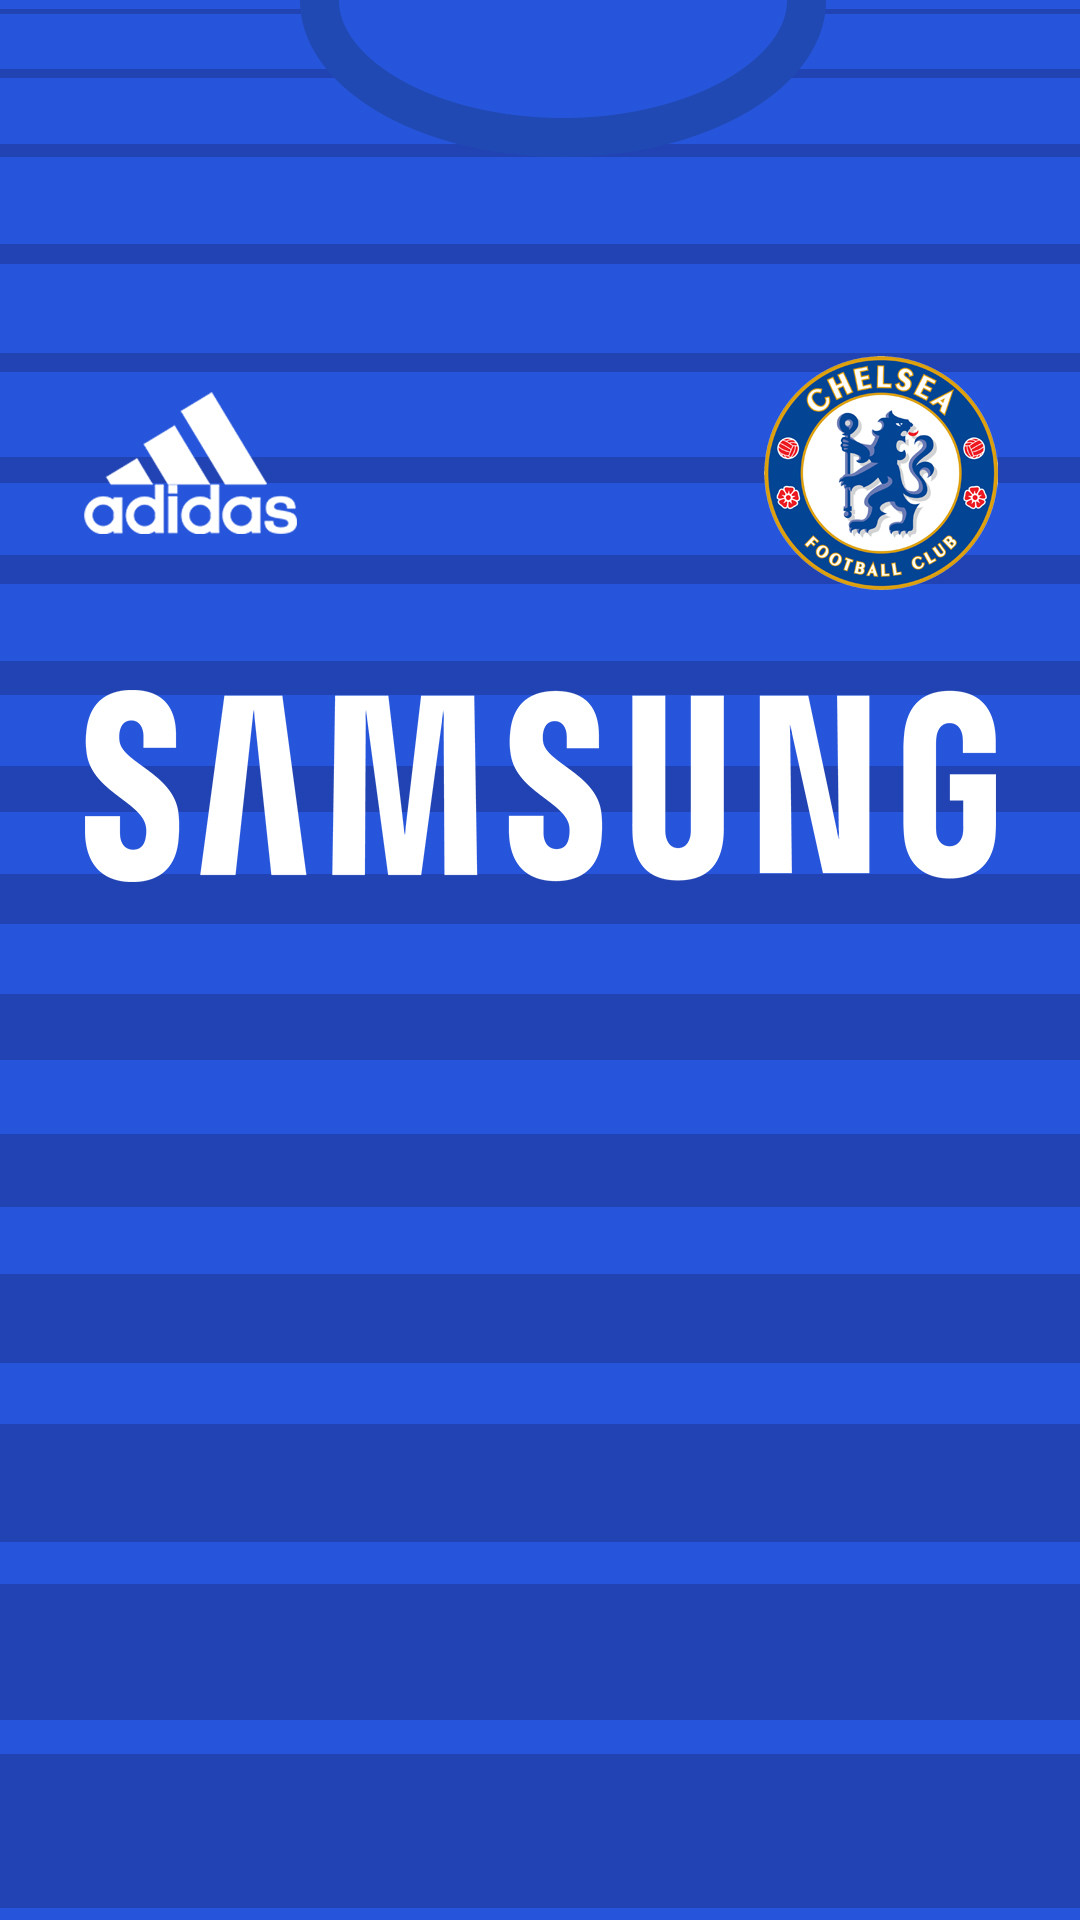 1080x1920 Chelsea Logo, Chelsea Fc, Football Jerseys, Football Players, Football  Wallpaper, Iphone Wallpapers, Soccer Kits, Messi, Fc Barcelona